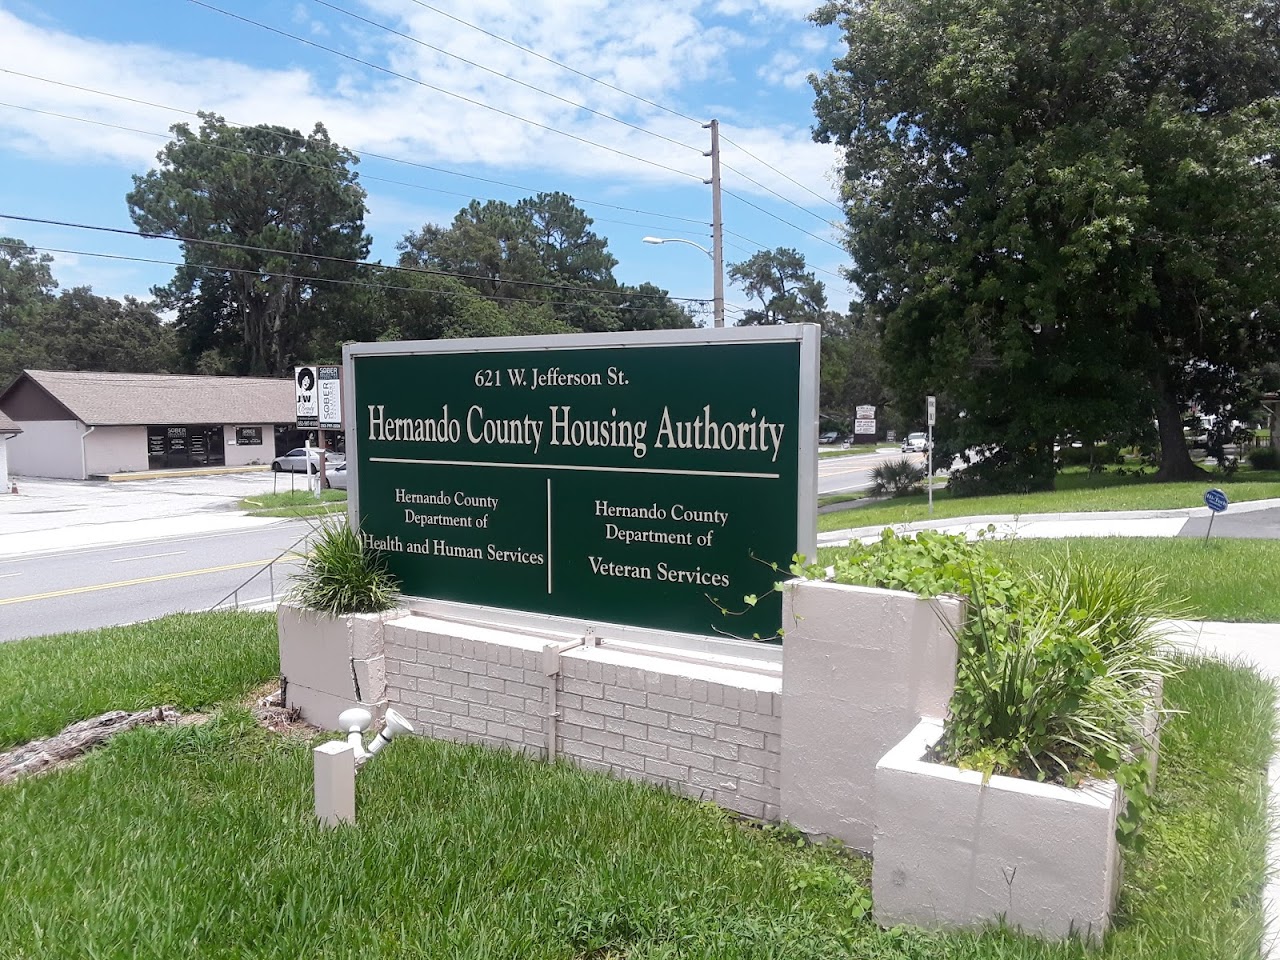 Photo of Hernando County Housing Authority at 621 W. Jefferson Street BROOKSVILLE, FL 34601